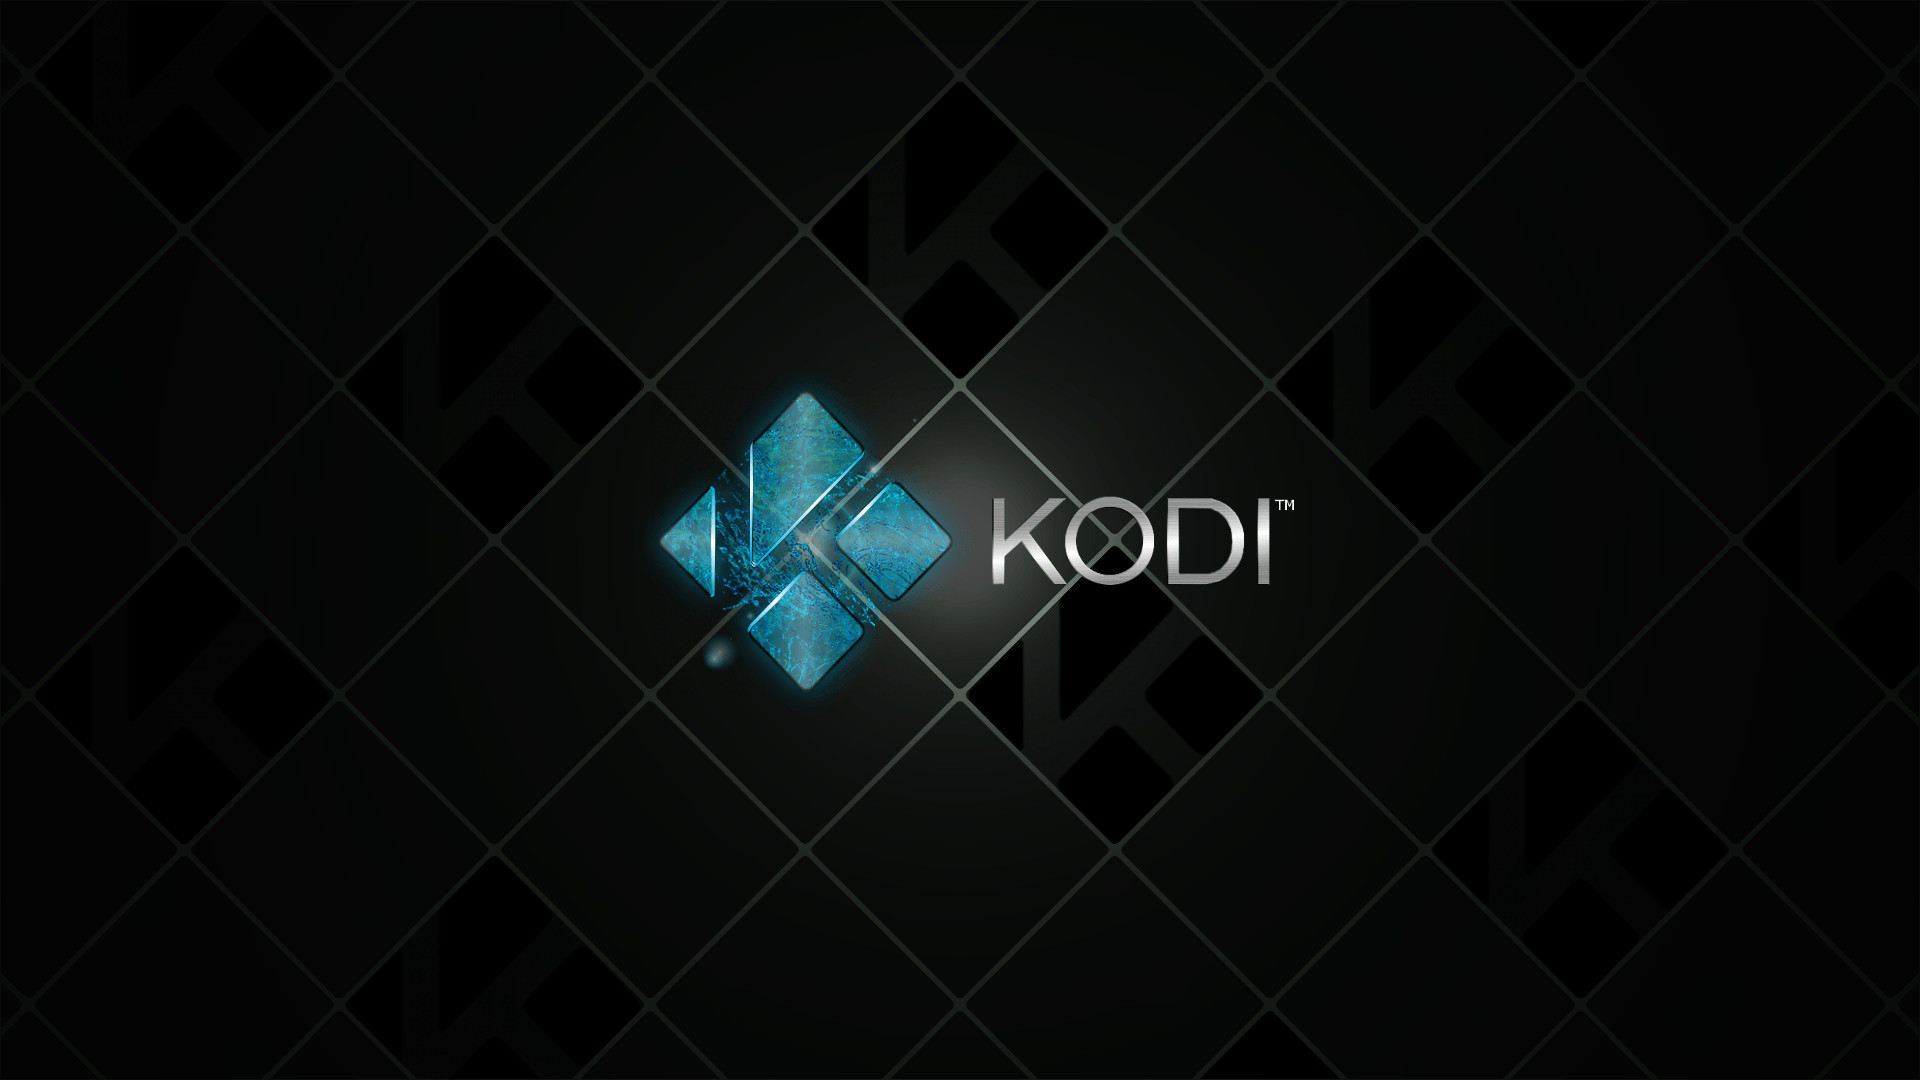 Kodi Background 1080p Wallpapers – WallpaperSafari